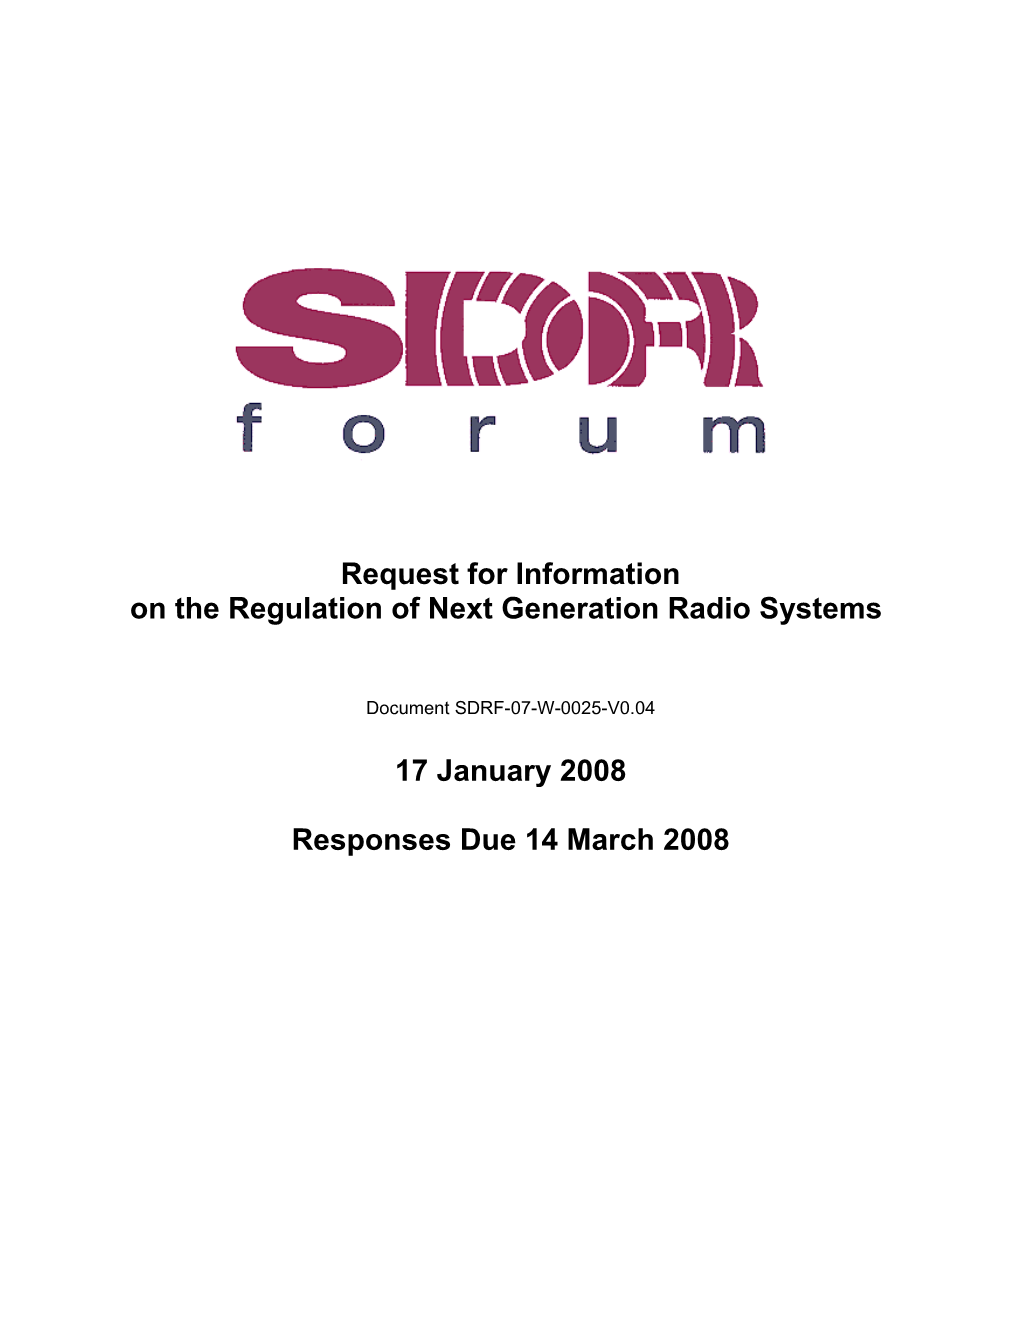 On the Regulation of Next Generation Radio Systems